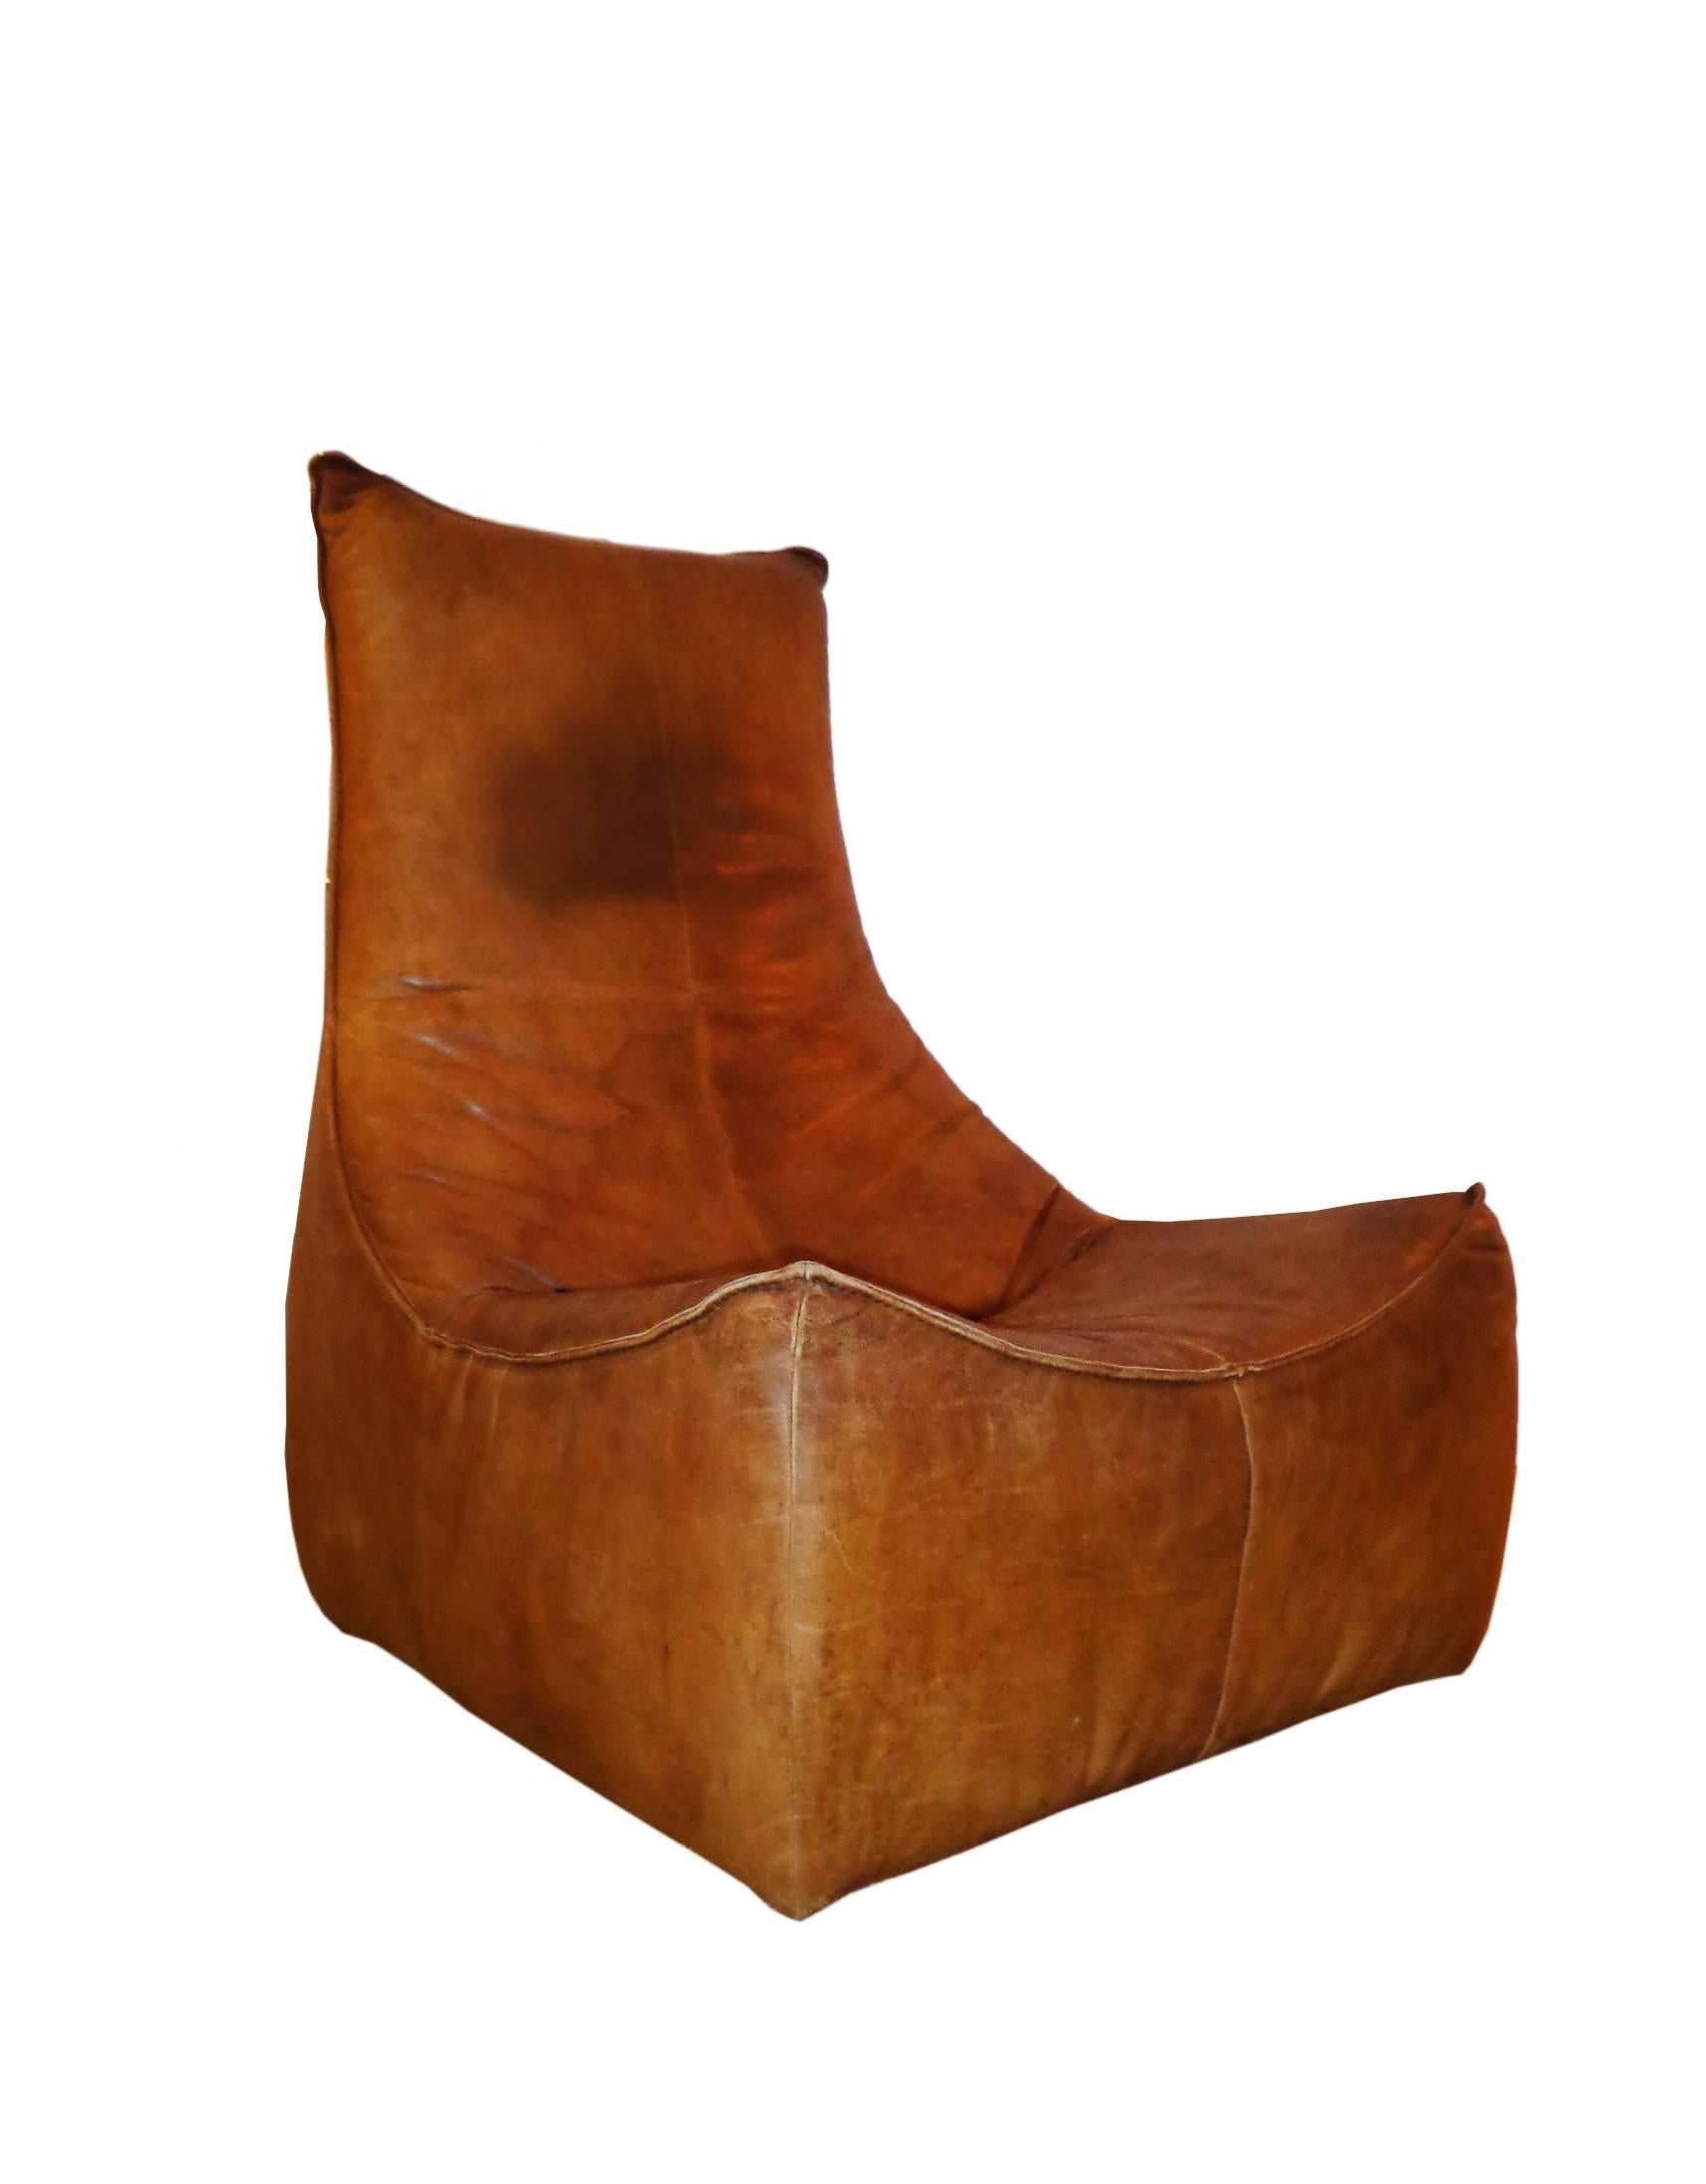 Mid-Century Modern Lounge Club Chair in Cognac Leather by Gerard Van Den Berg for Montis 1970 Dutch